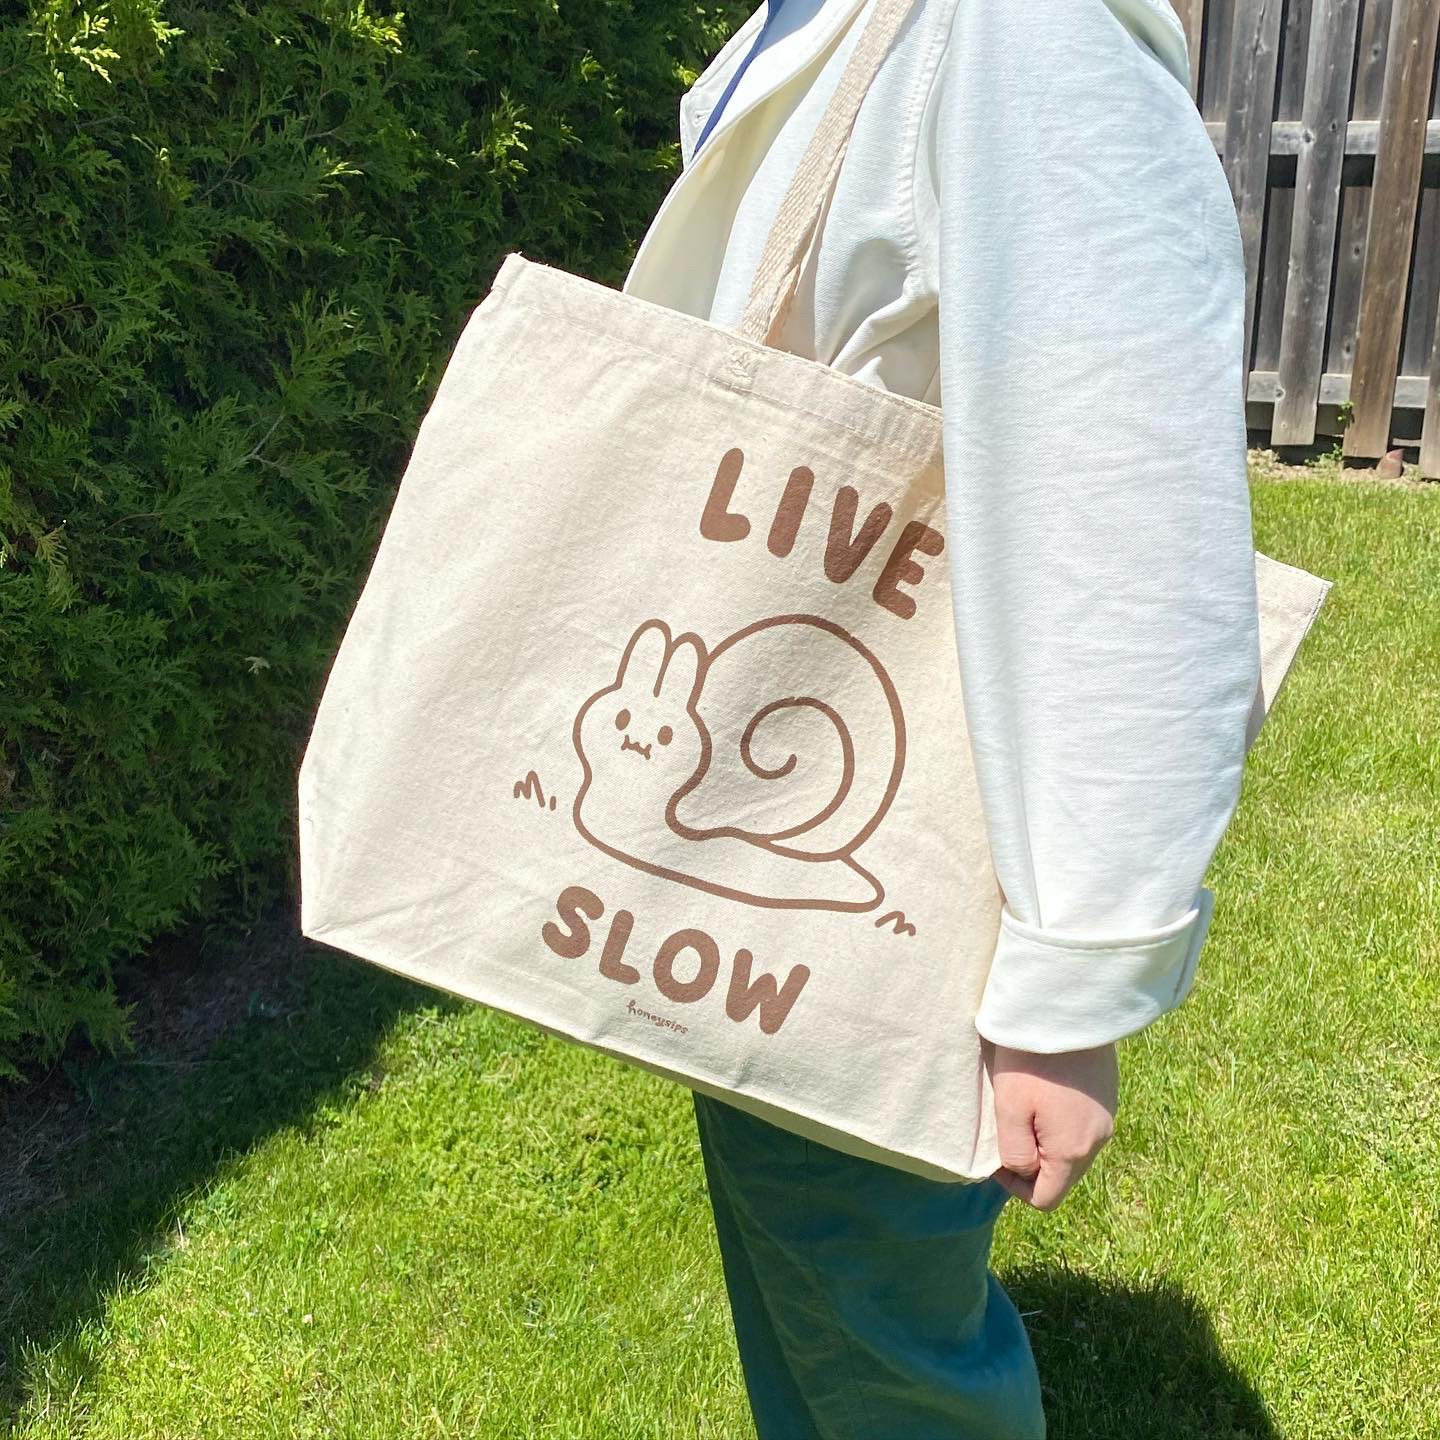 ✿SECONDS✿ Live Slow Jumbo Tote Bag